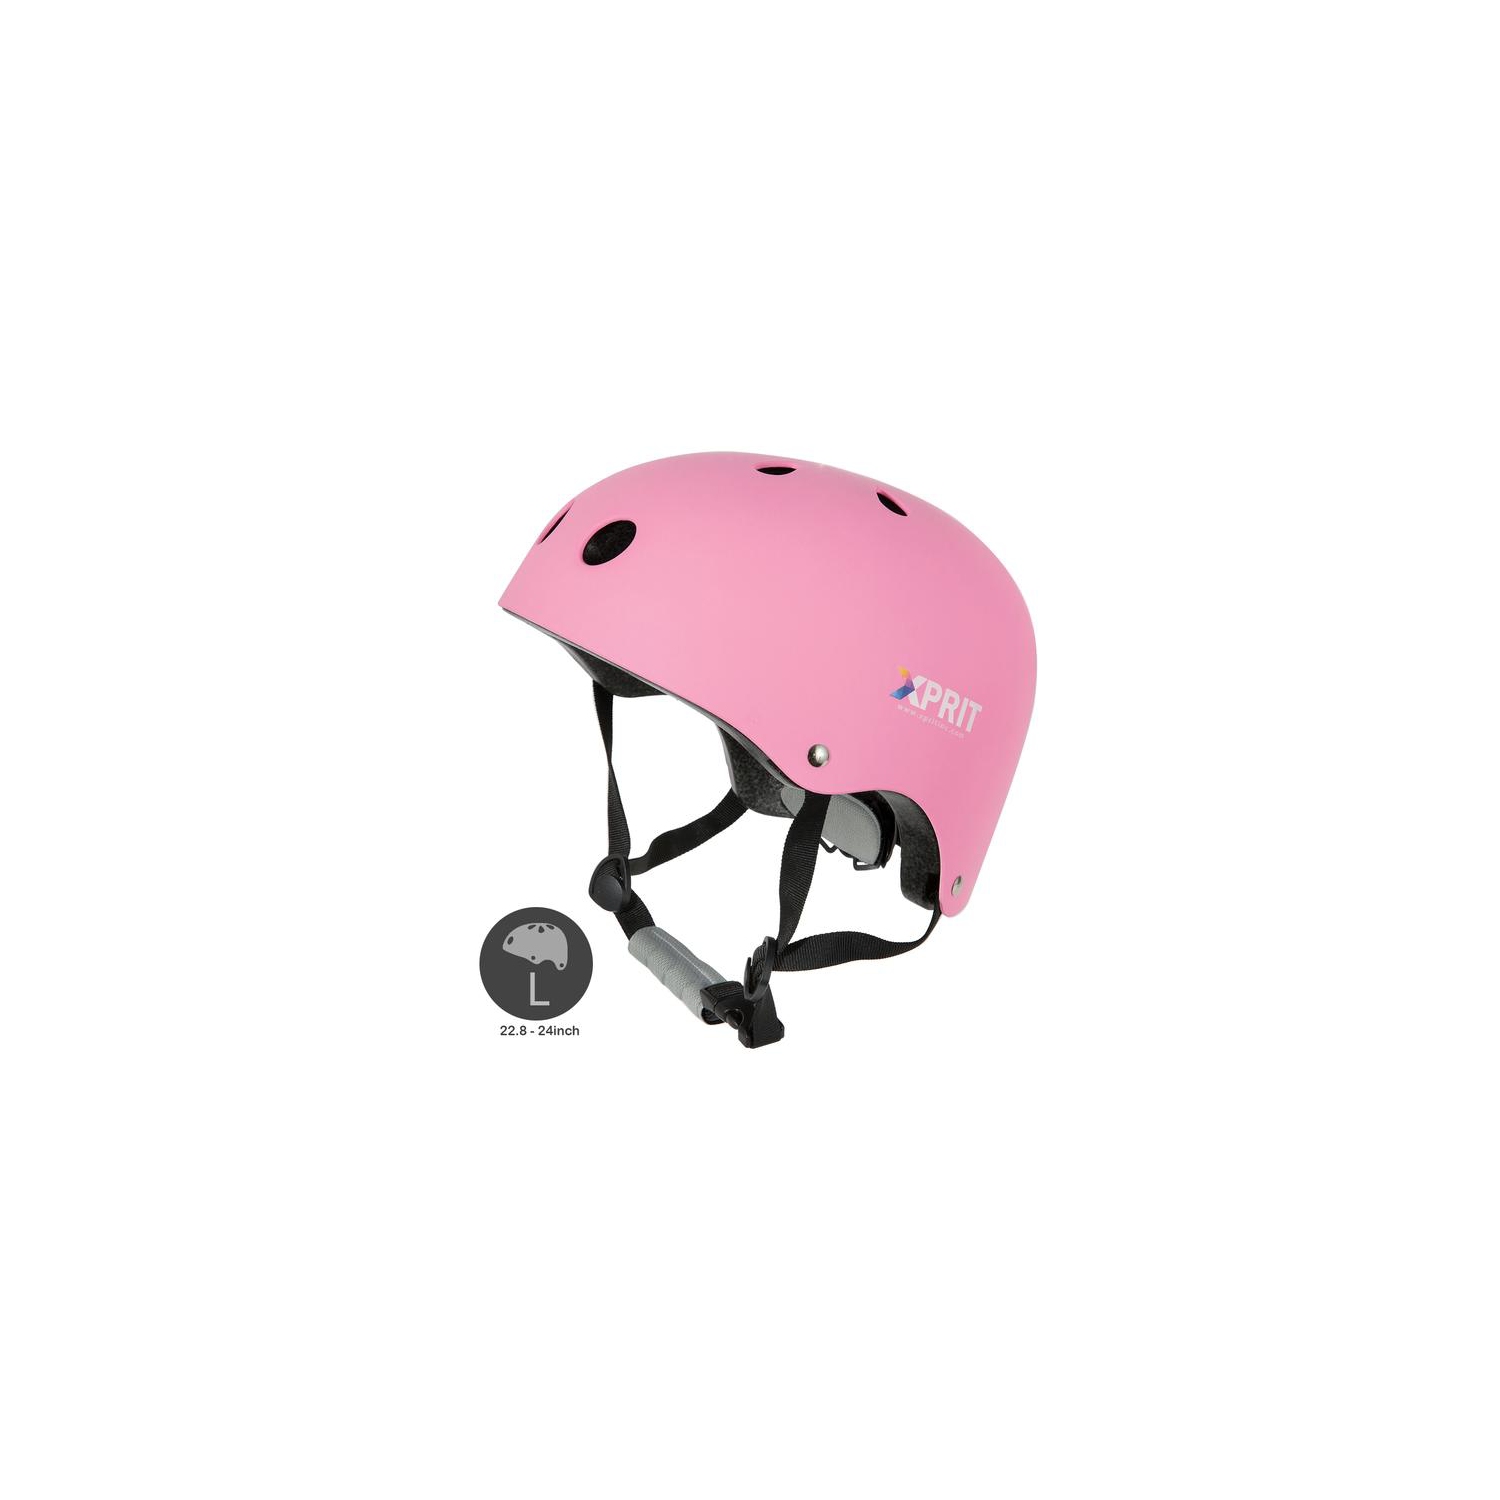 XPRIT Skateboarding, Scooter, Bike, Helmet w/Impact Resistance Pink Large